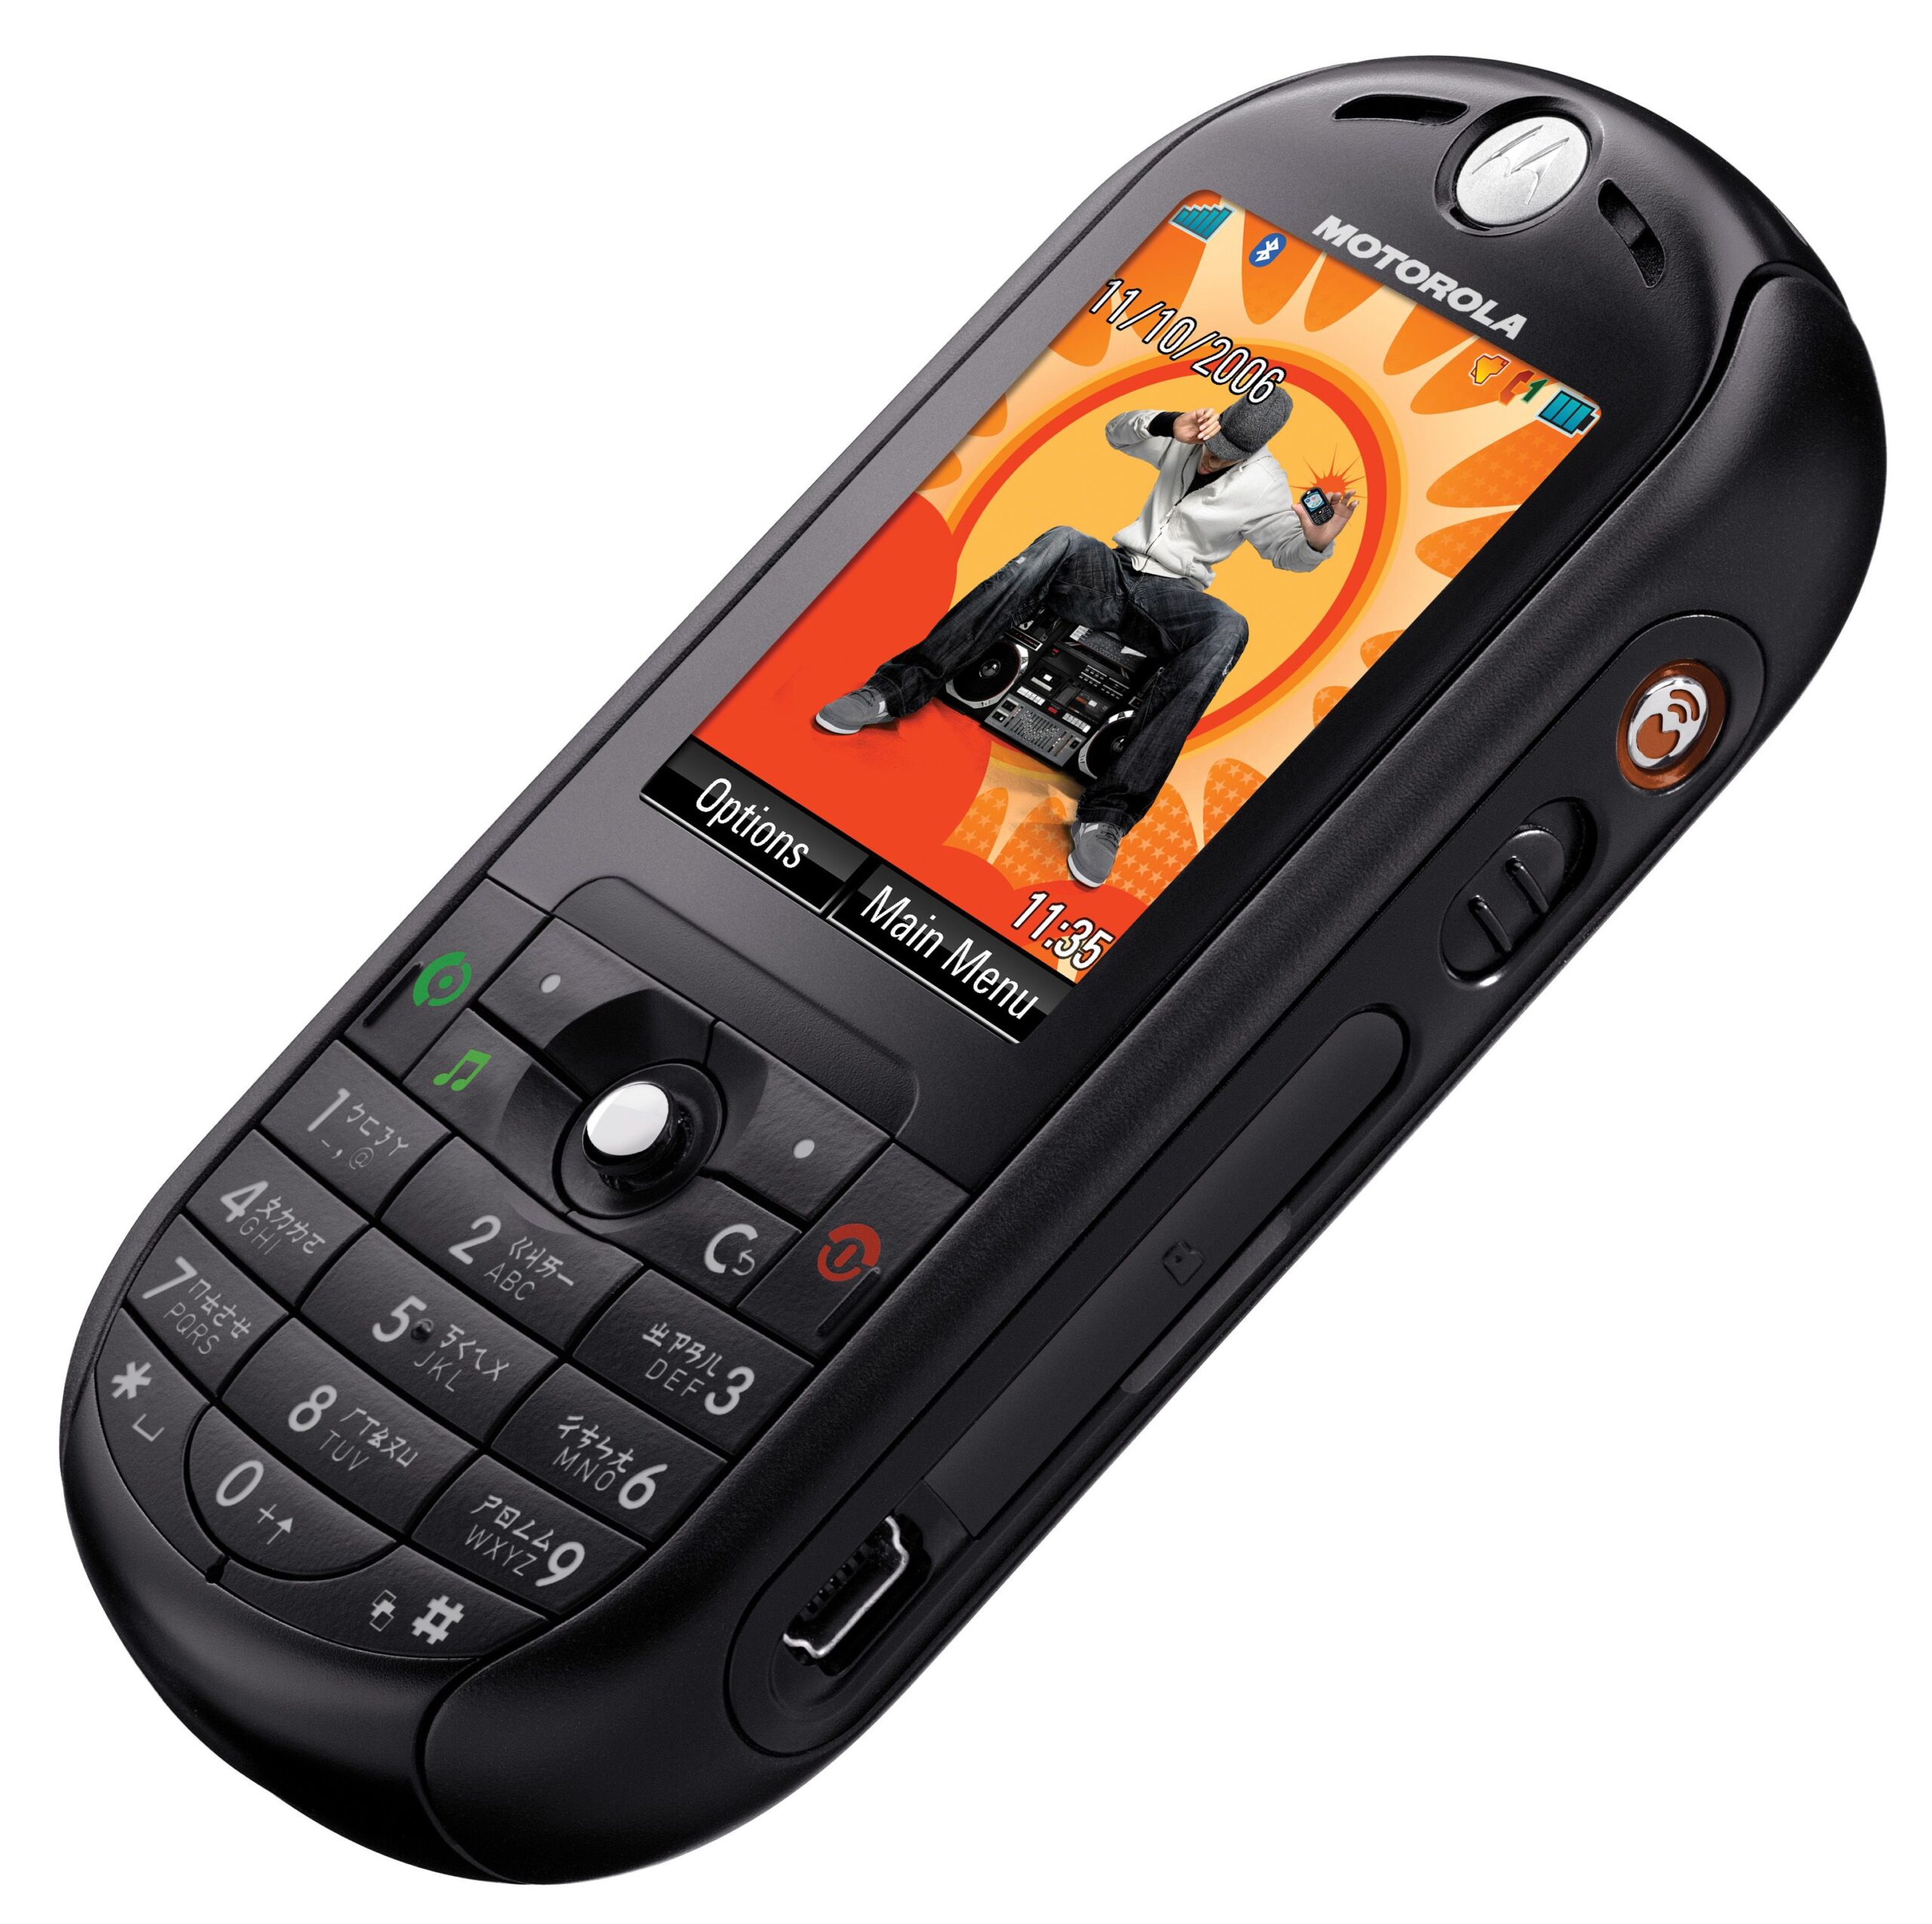 Whatsapp Motorola ROKR E2